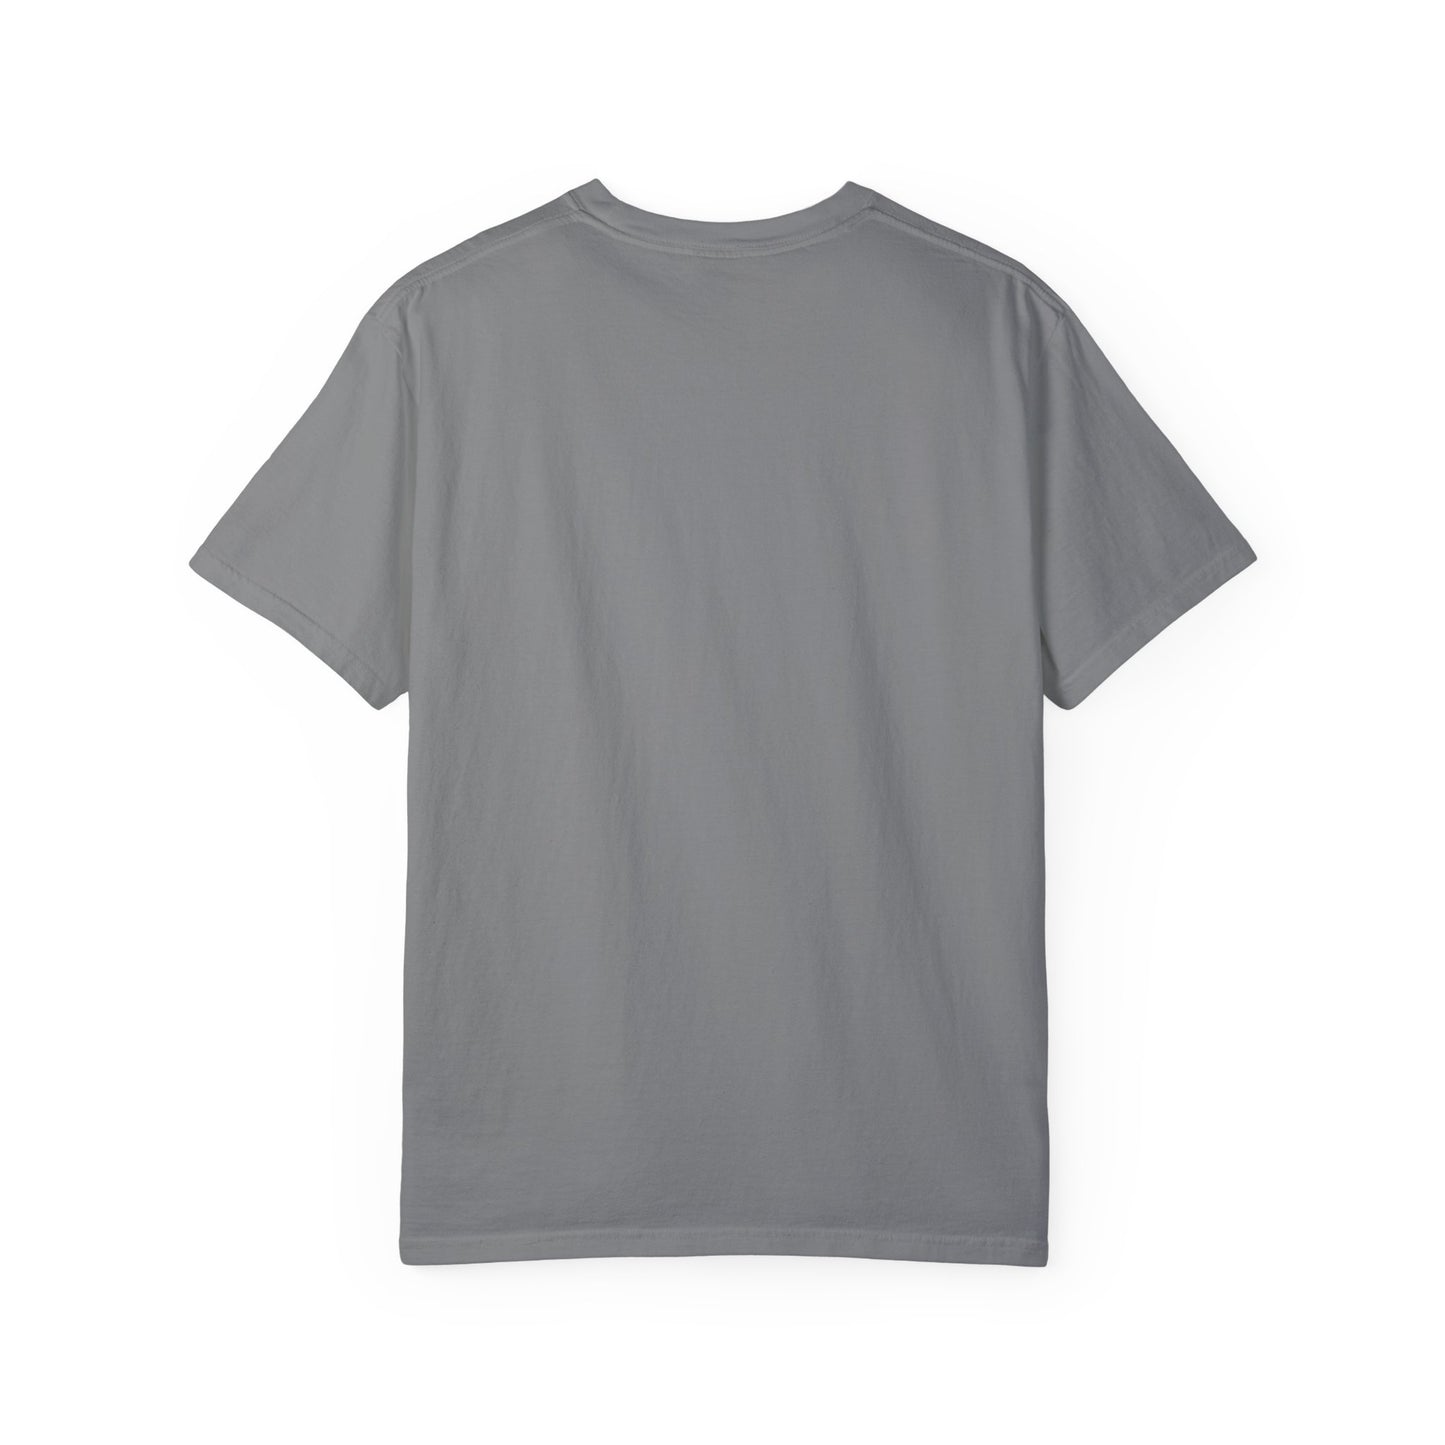 Lion Head Cool Graphic Design Novelty Unisex Garment-dyed T-shirt Cotton Funny Humorous Graphic Soft Premium Unisex Men Women Grey T-shirt Birthday Gift-40